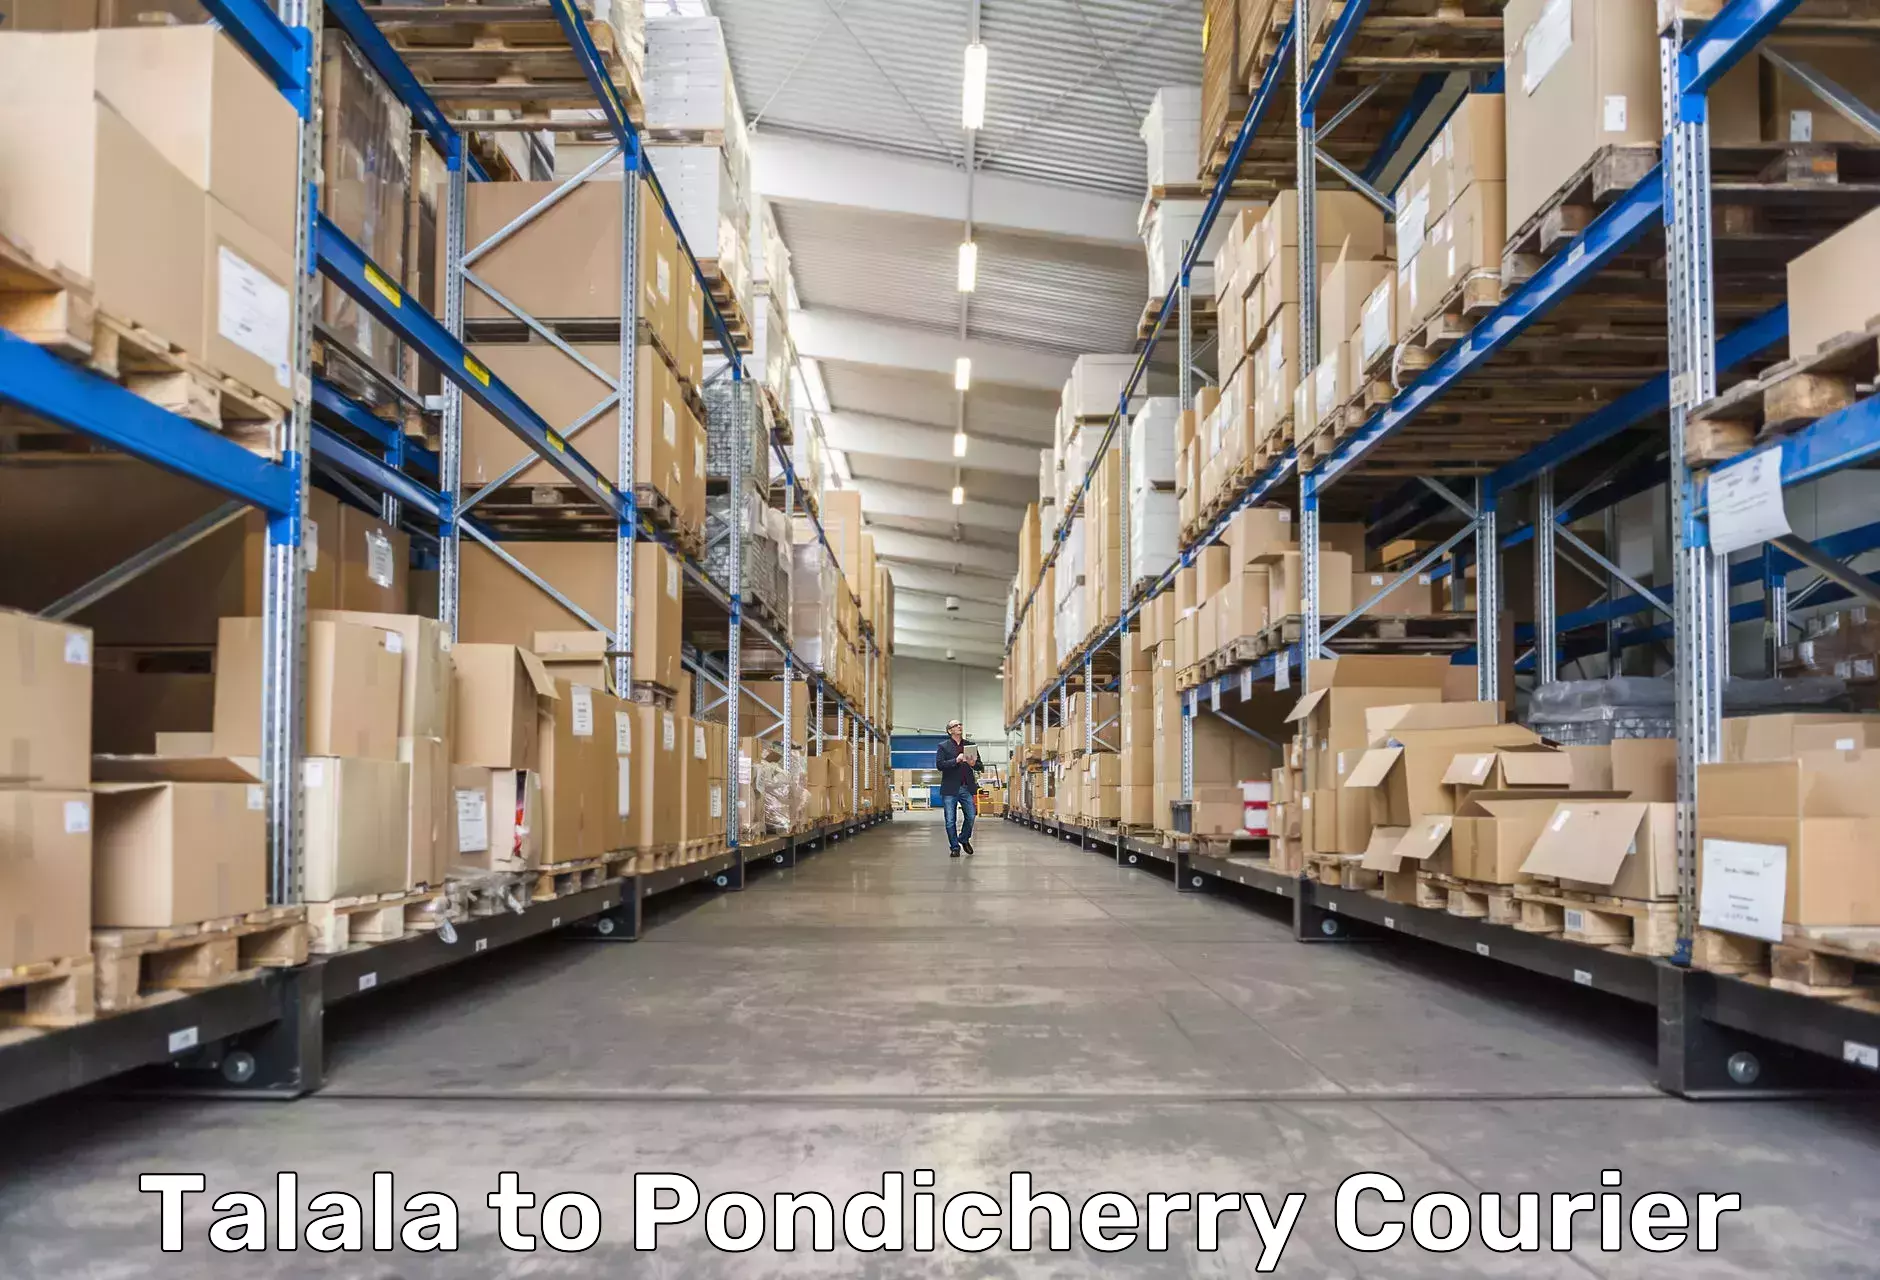 Courier service comparison Talala to Pondicherry